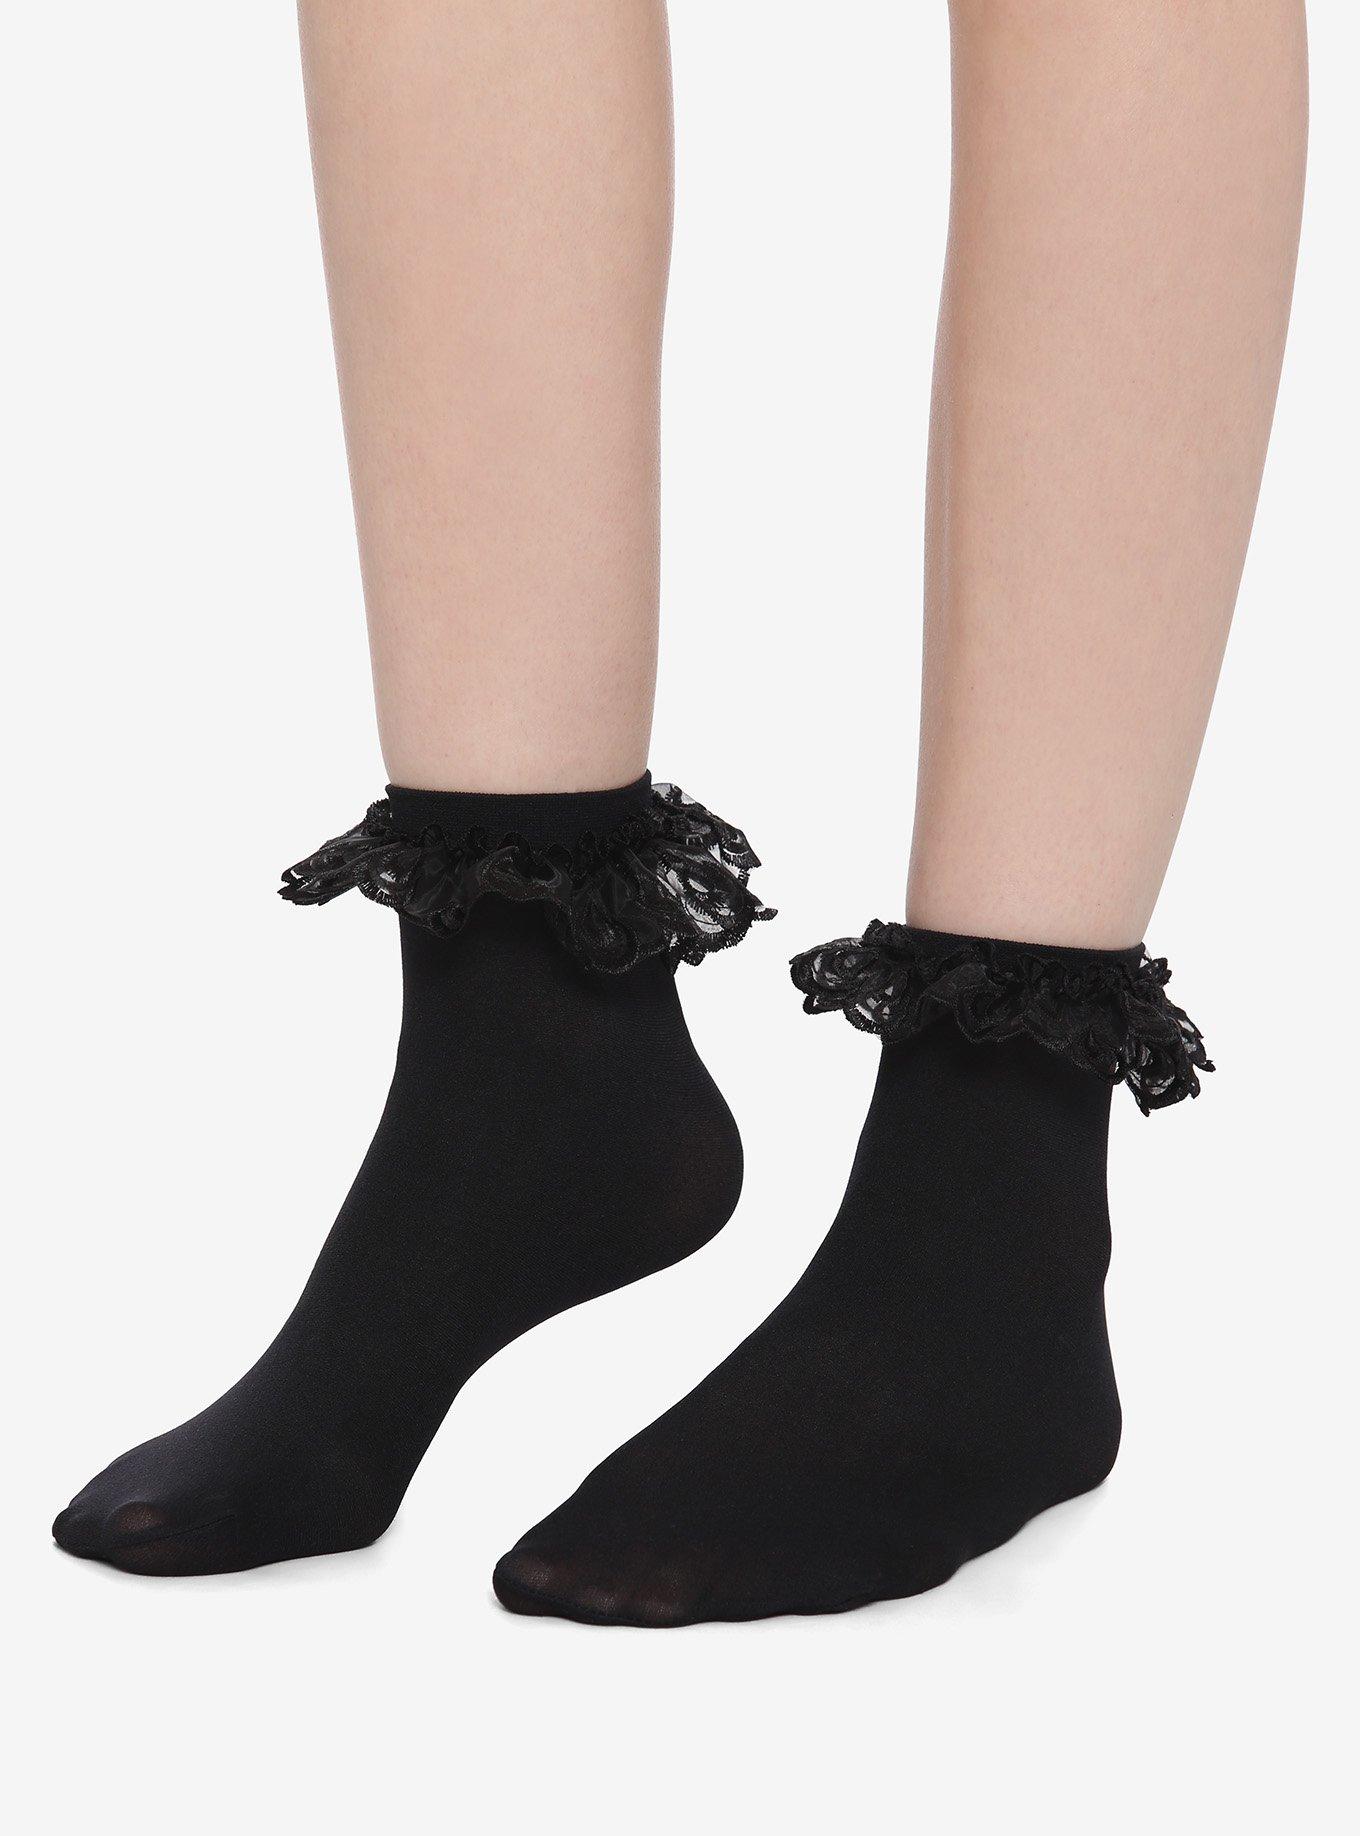 Caramelo Knee High Ruffle Socks, Black - Bobbyann